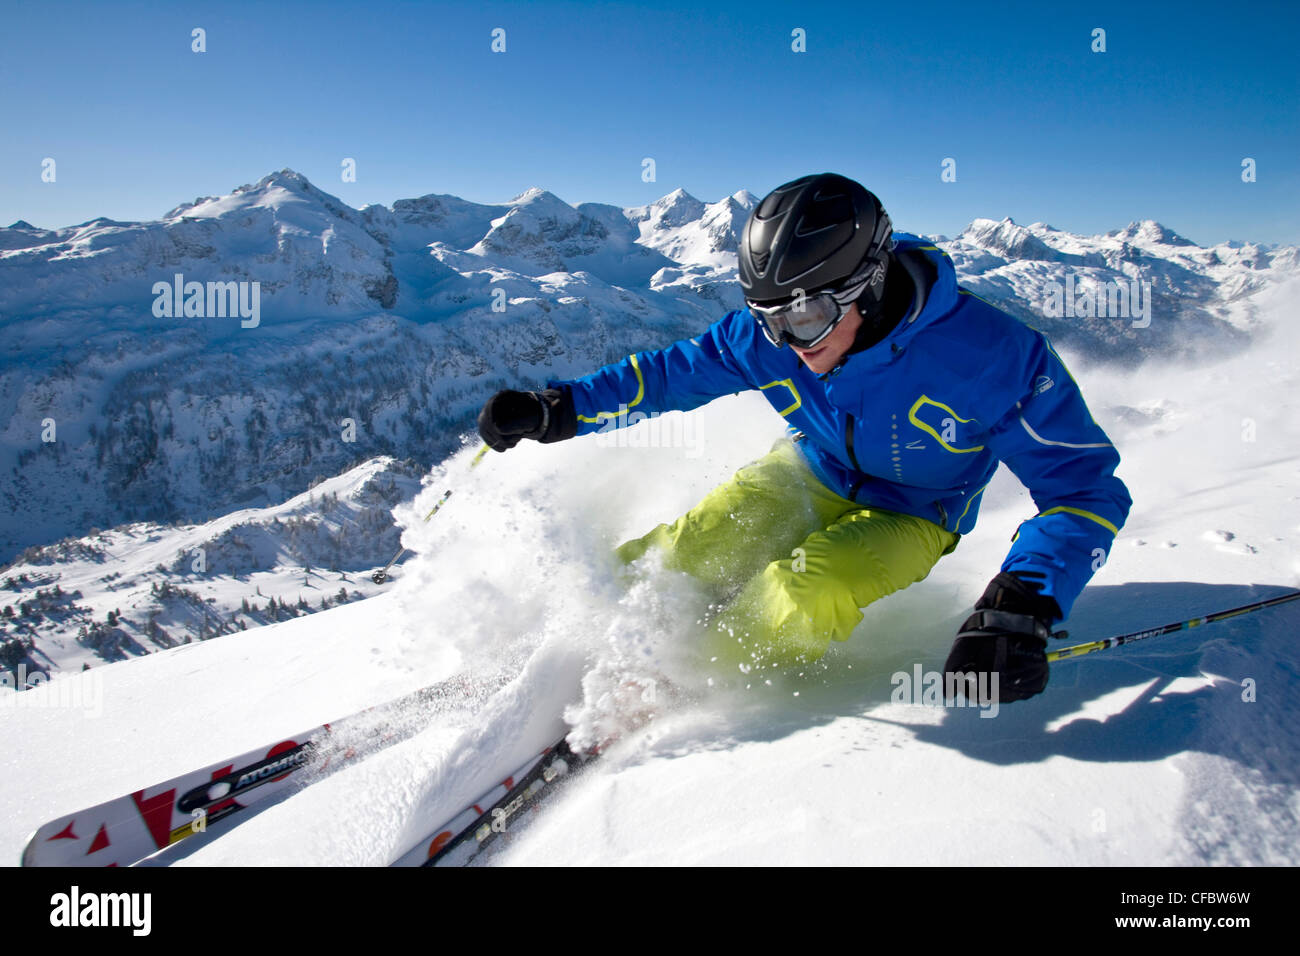 Freeriding, ski, skiing, Freeskiing, powder snow, Freeriding, man, go, powder snow slope, blue, sky, Alpine, powder snow, risk, Stock Photo